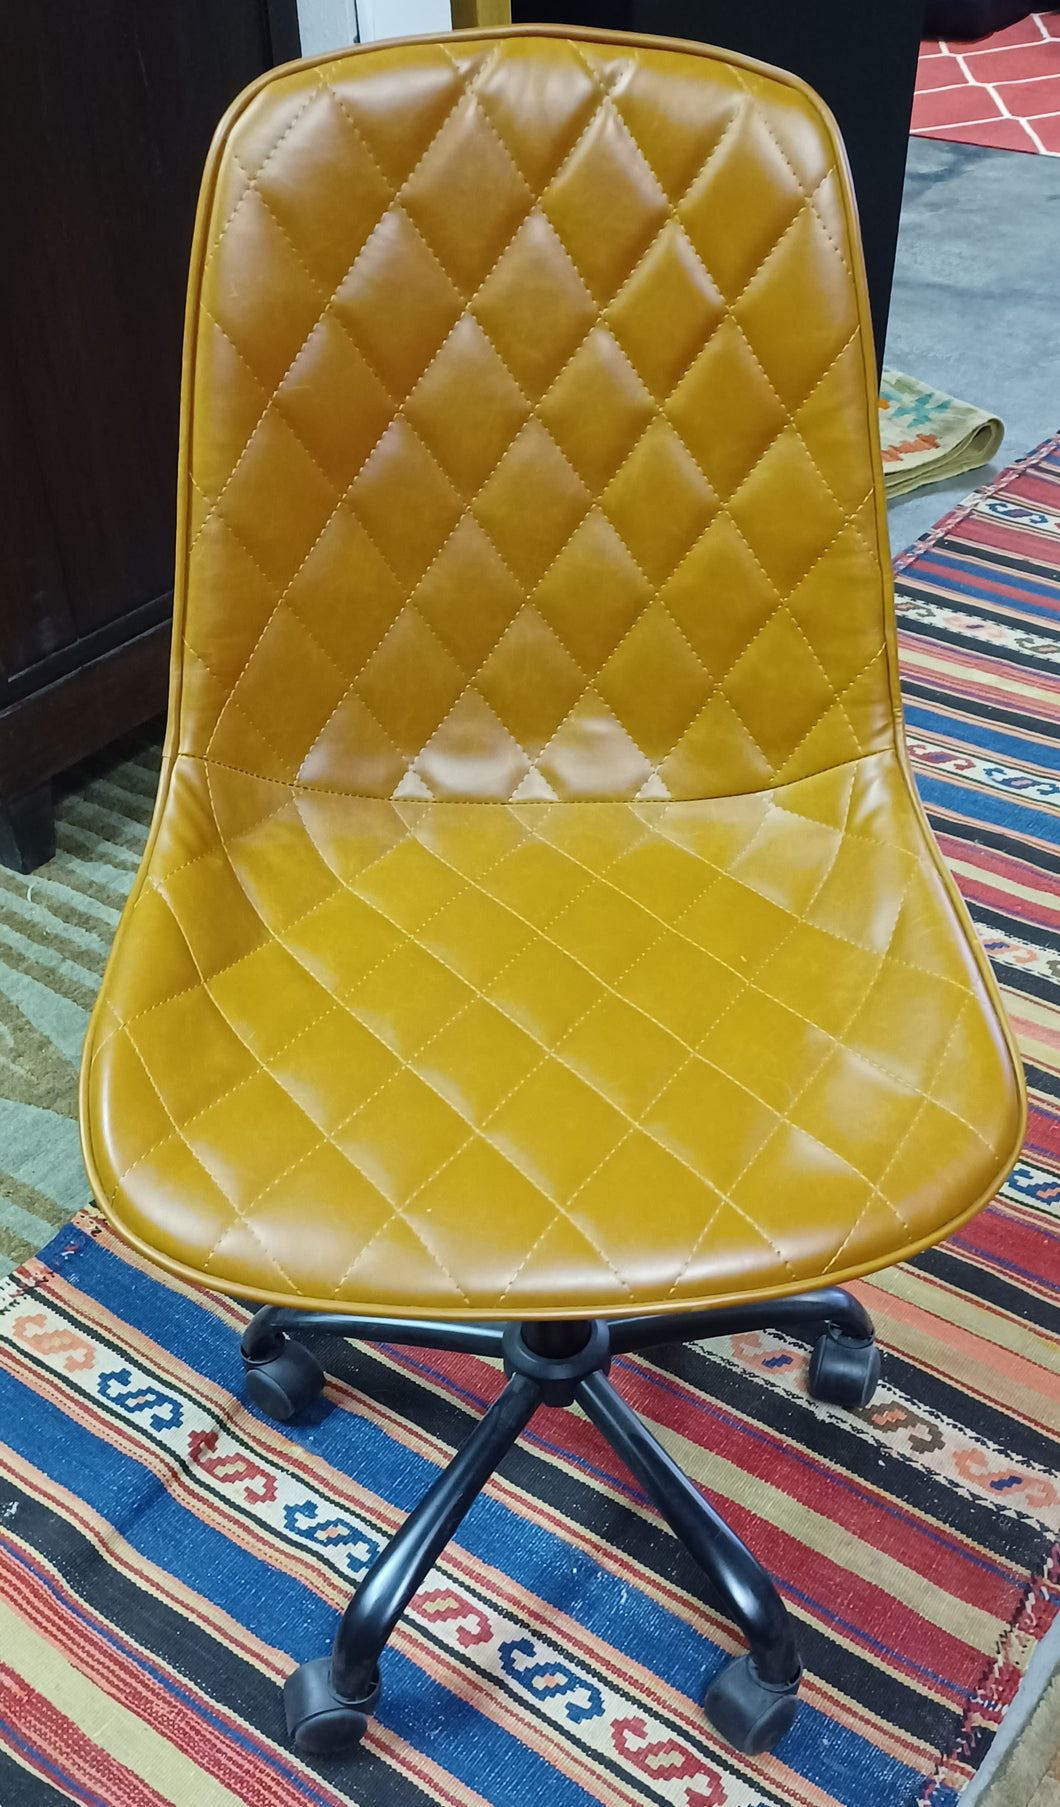 Tan Leather Diamond Stitching Office Chair